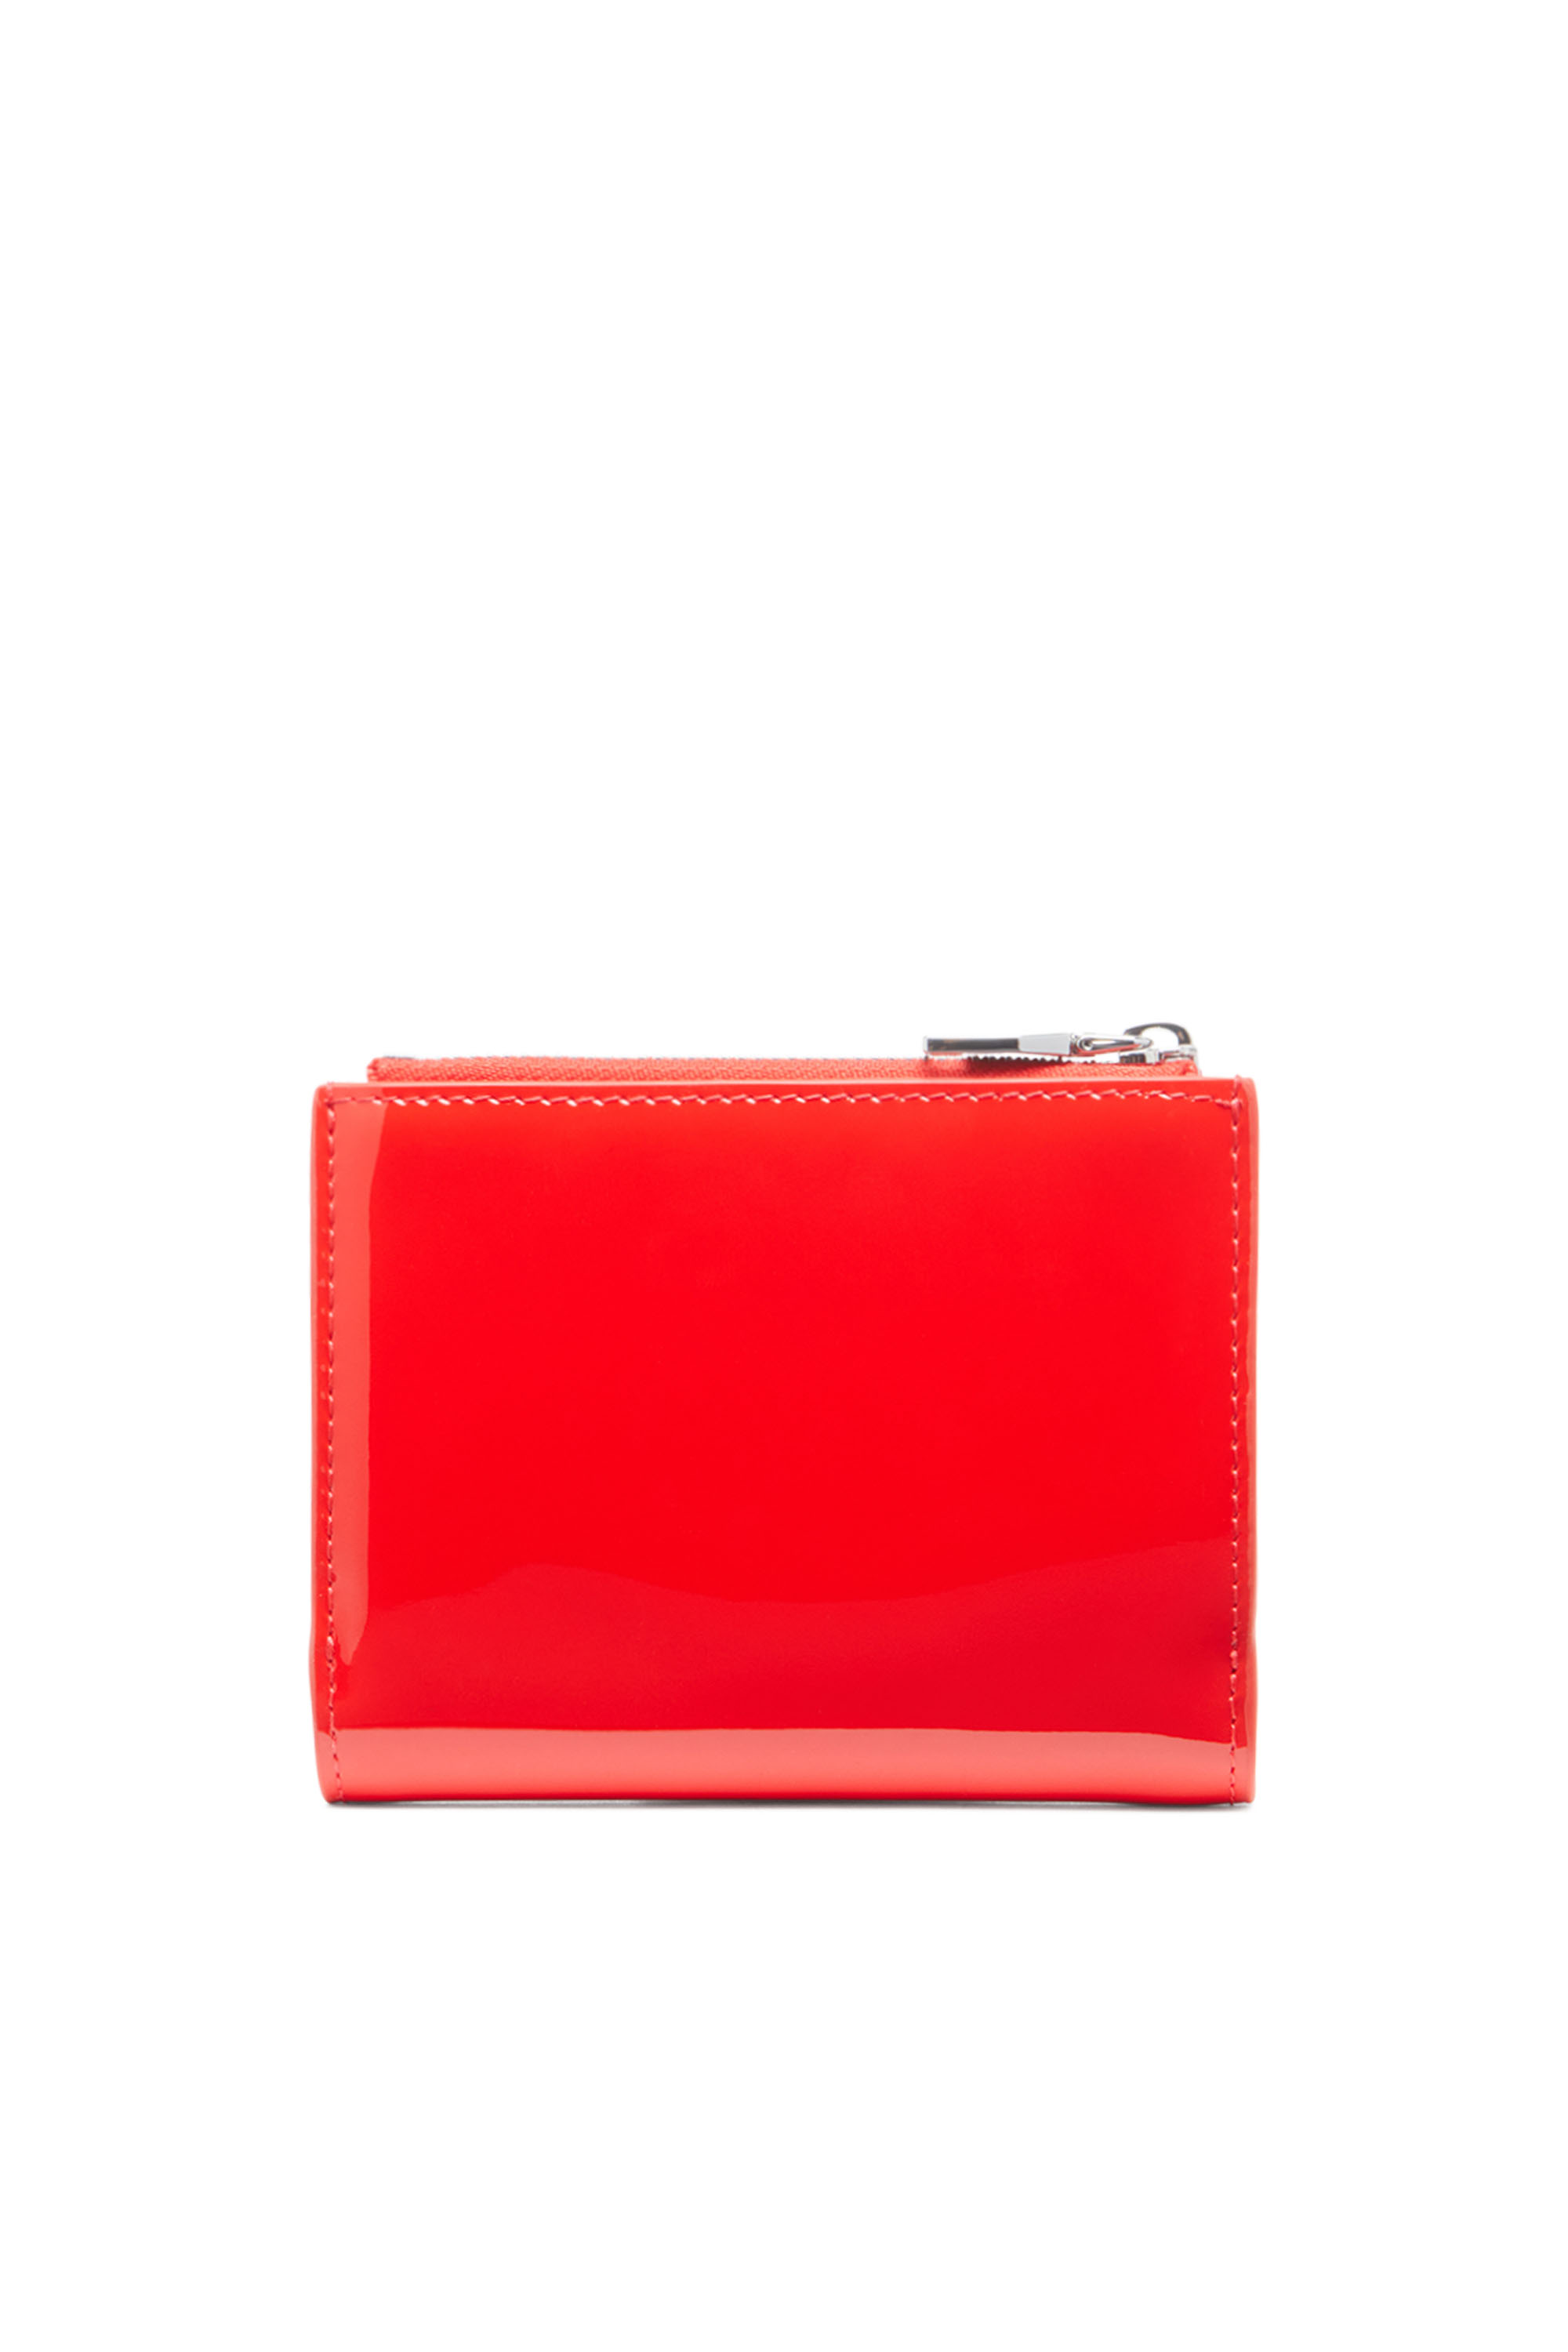 Diesel - PLAY BI-FOLD ZIP II, Female Small wallet in glossy leather in レッド - Image 2